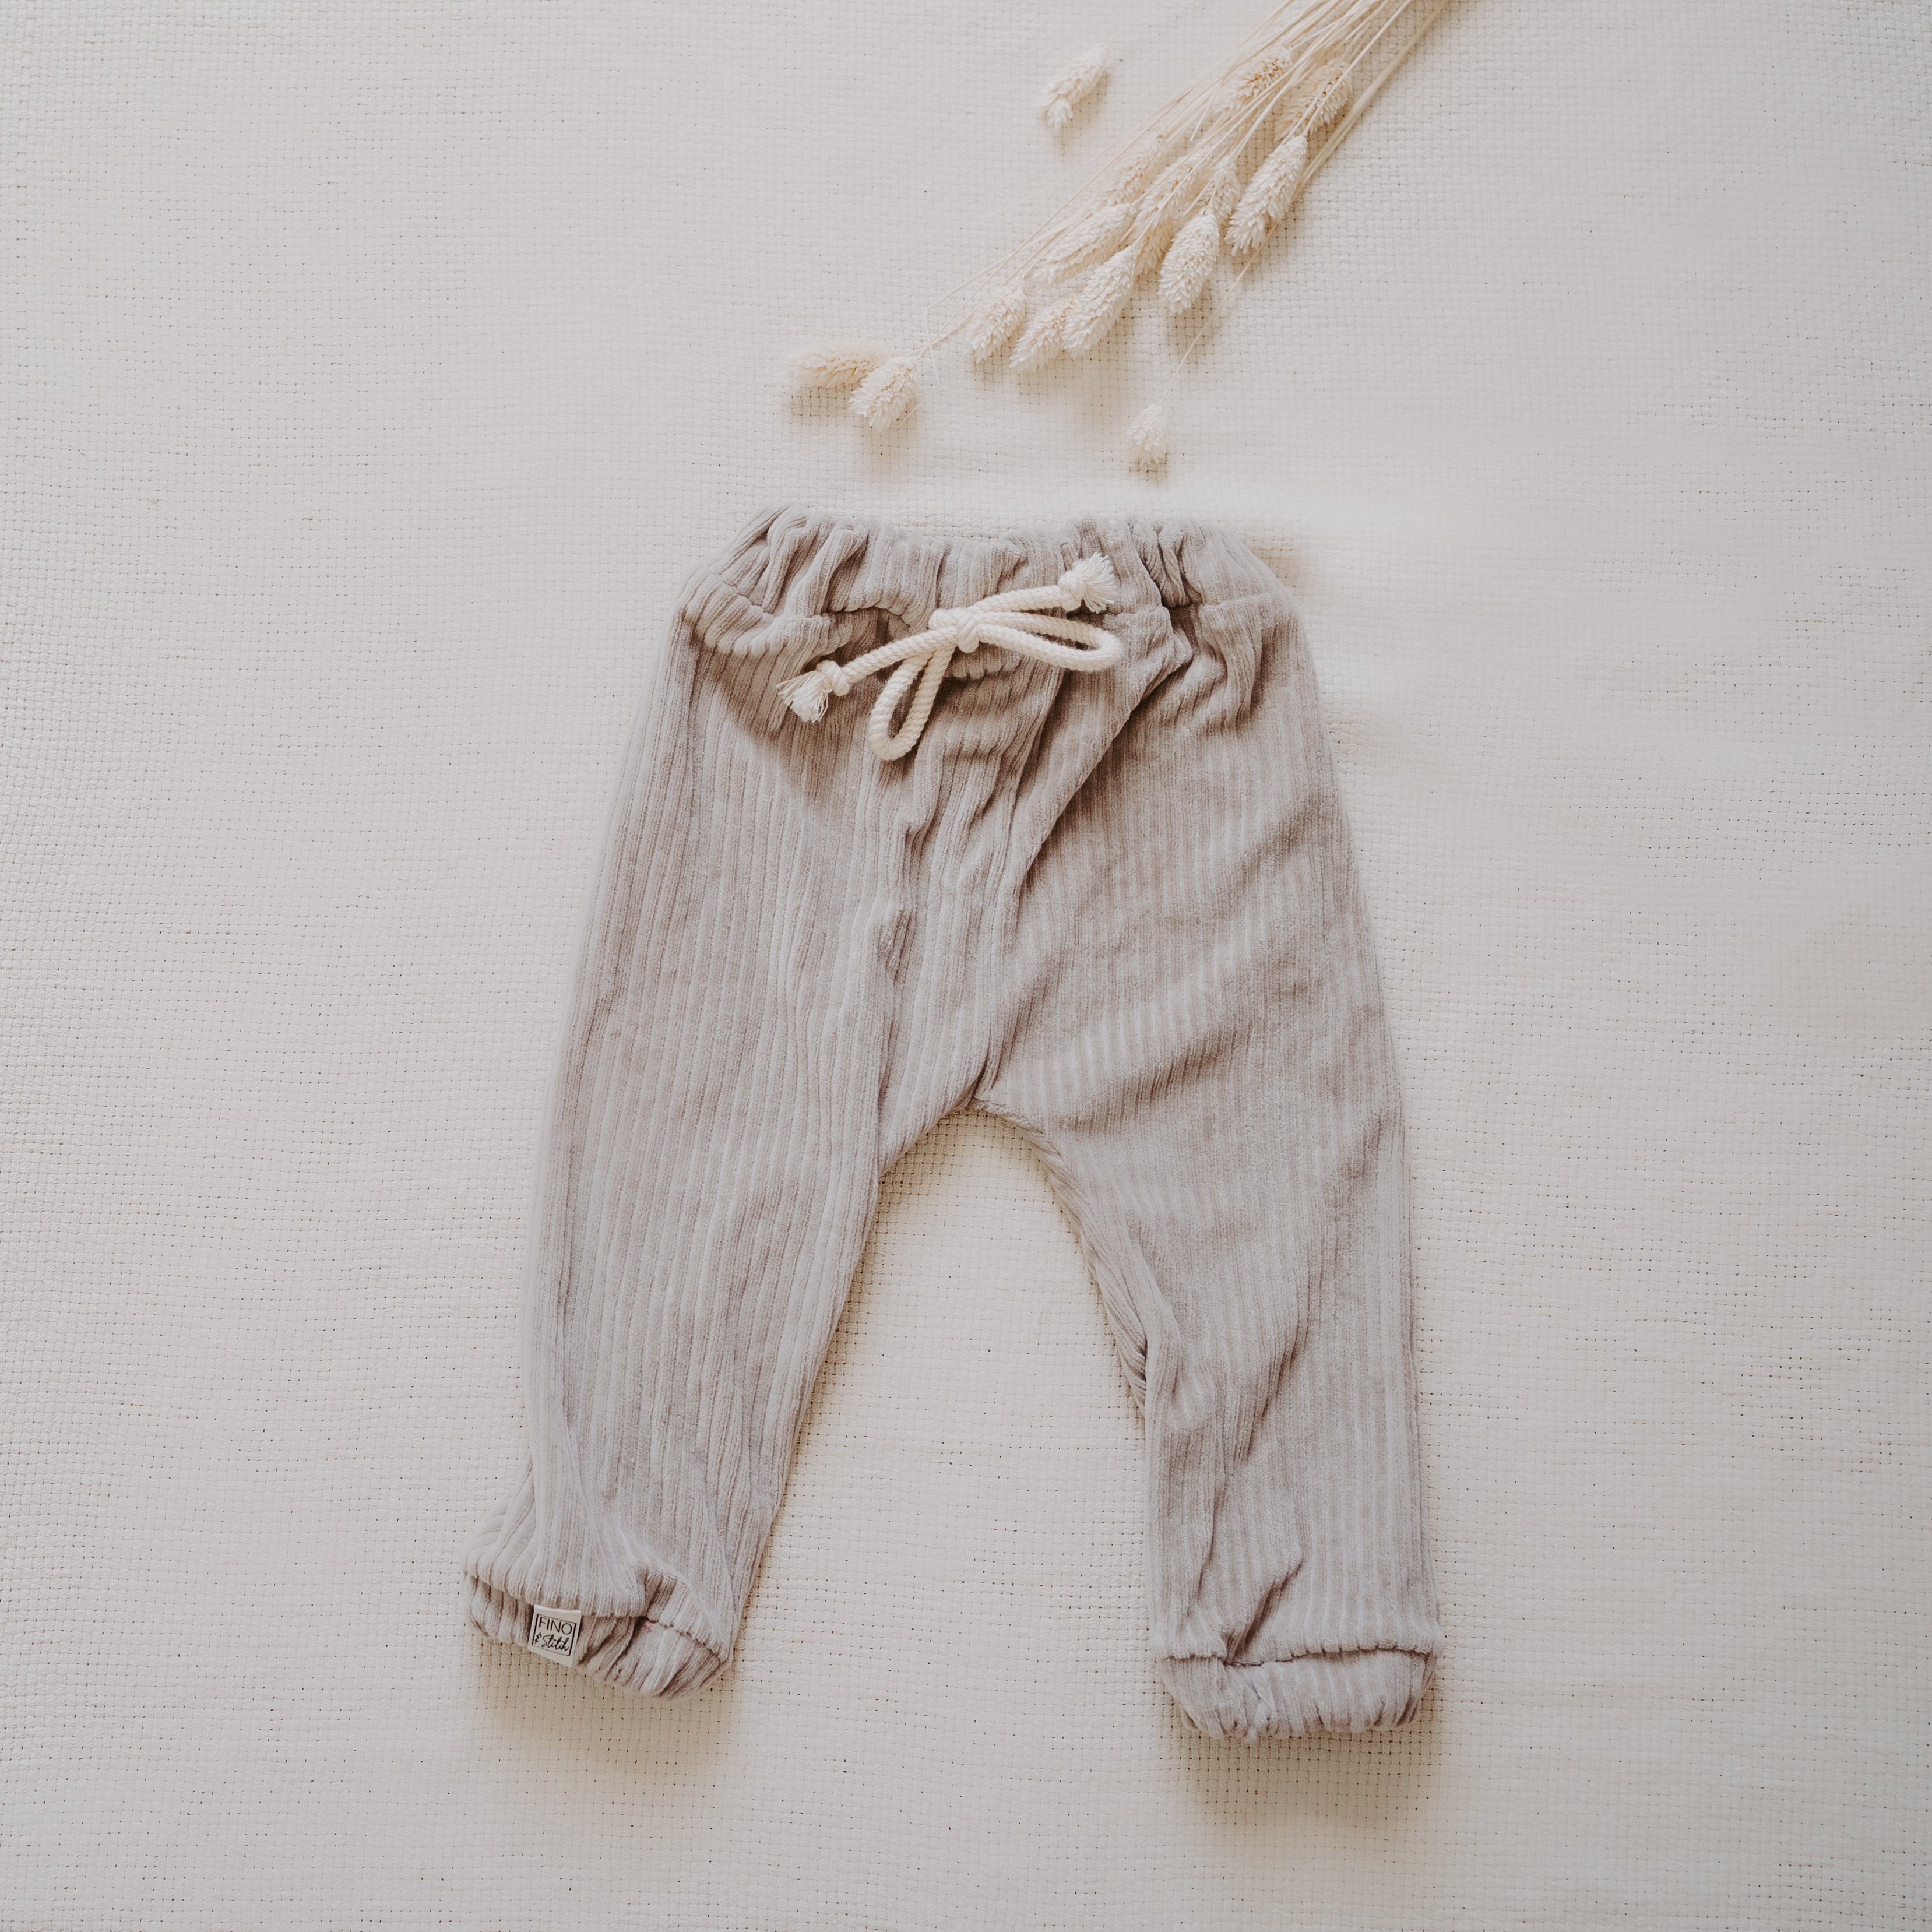 FINO & Stitch Kreativset DYI Nähset - Kuschel-Cord Jogger Pants Baby&Kids - zugeschnitten grau